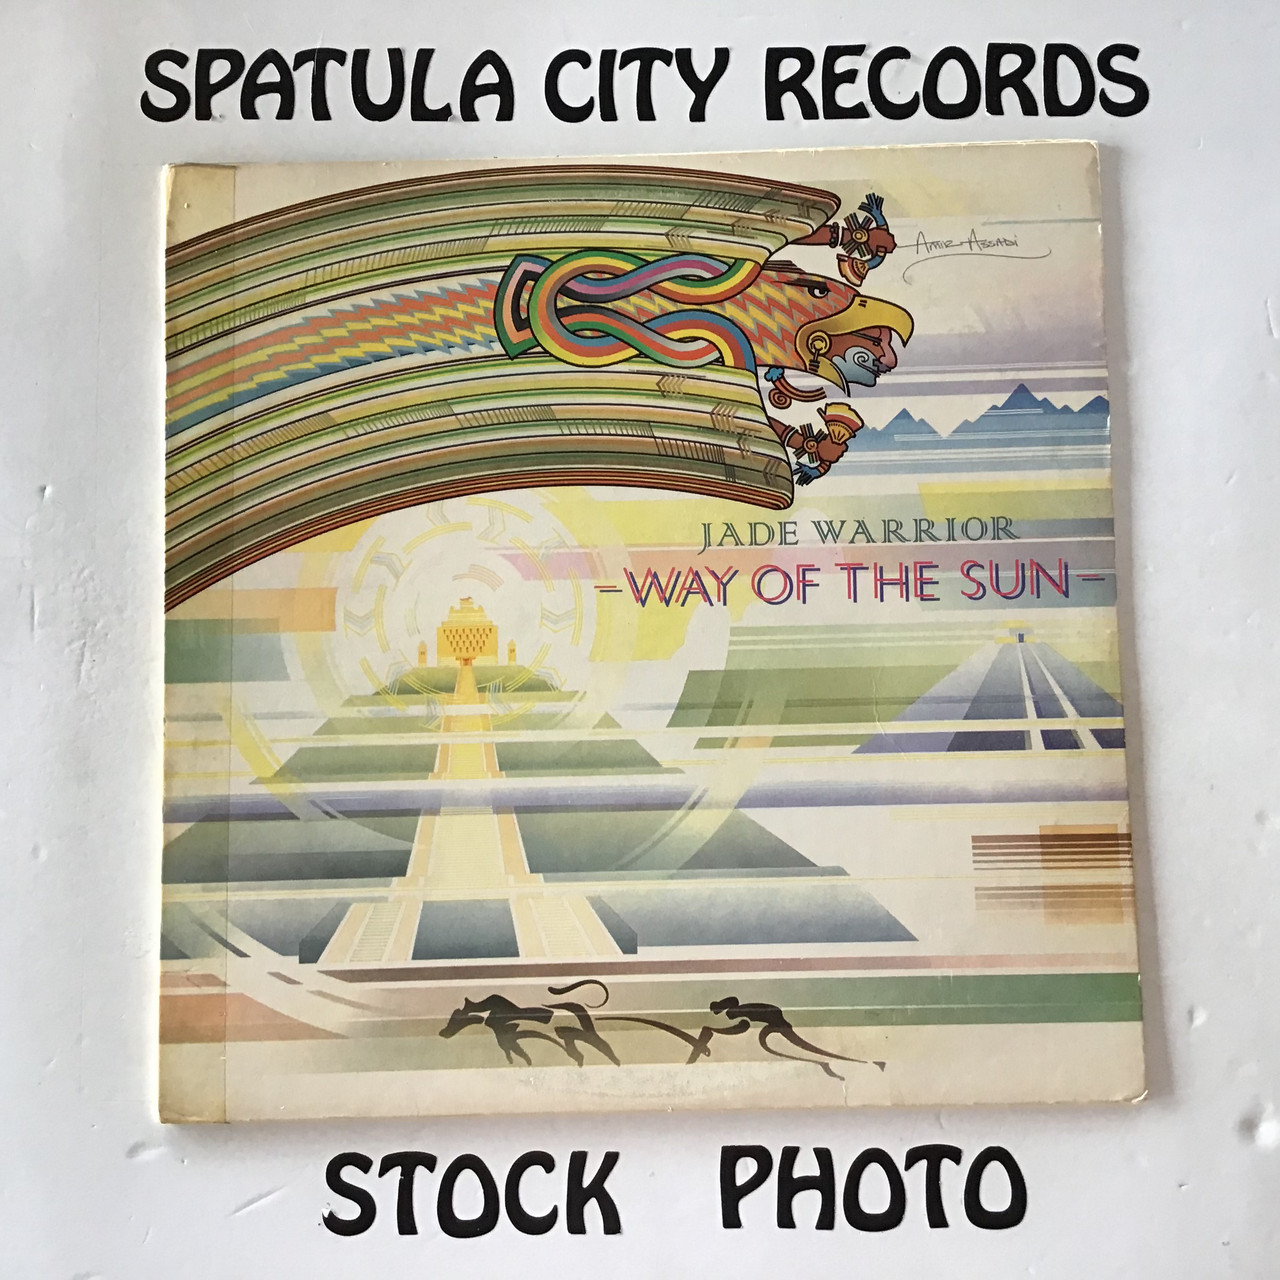 Jade Warrior - Way of the Sun - vinyl record album LP